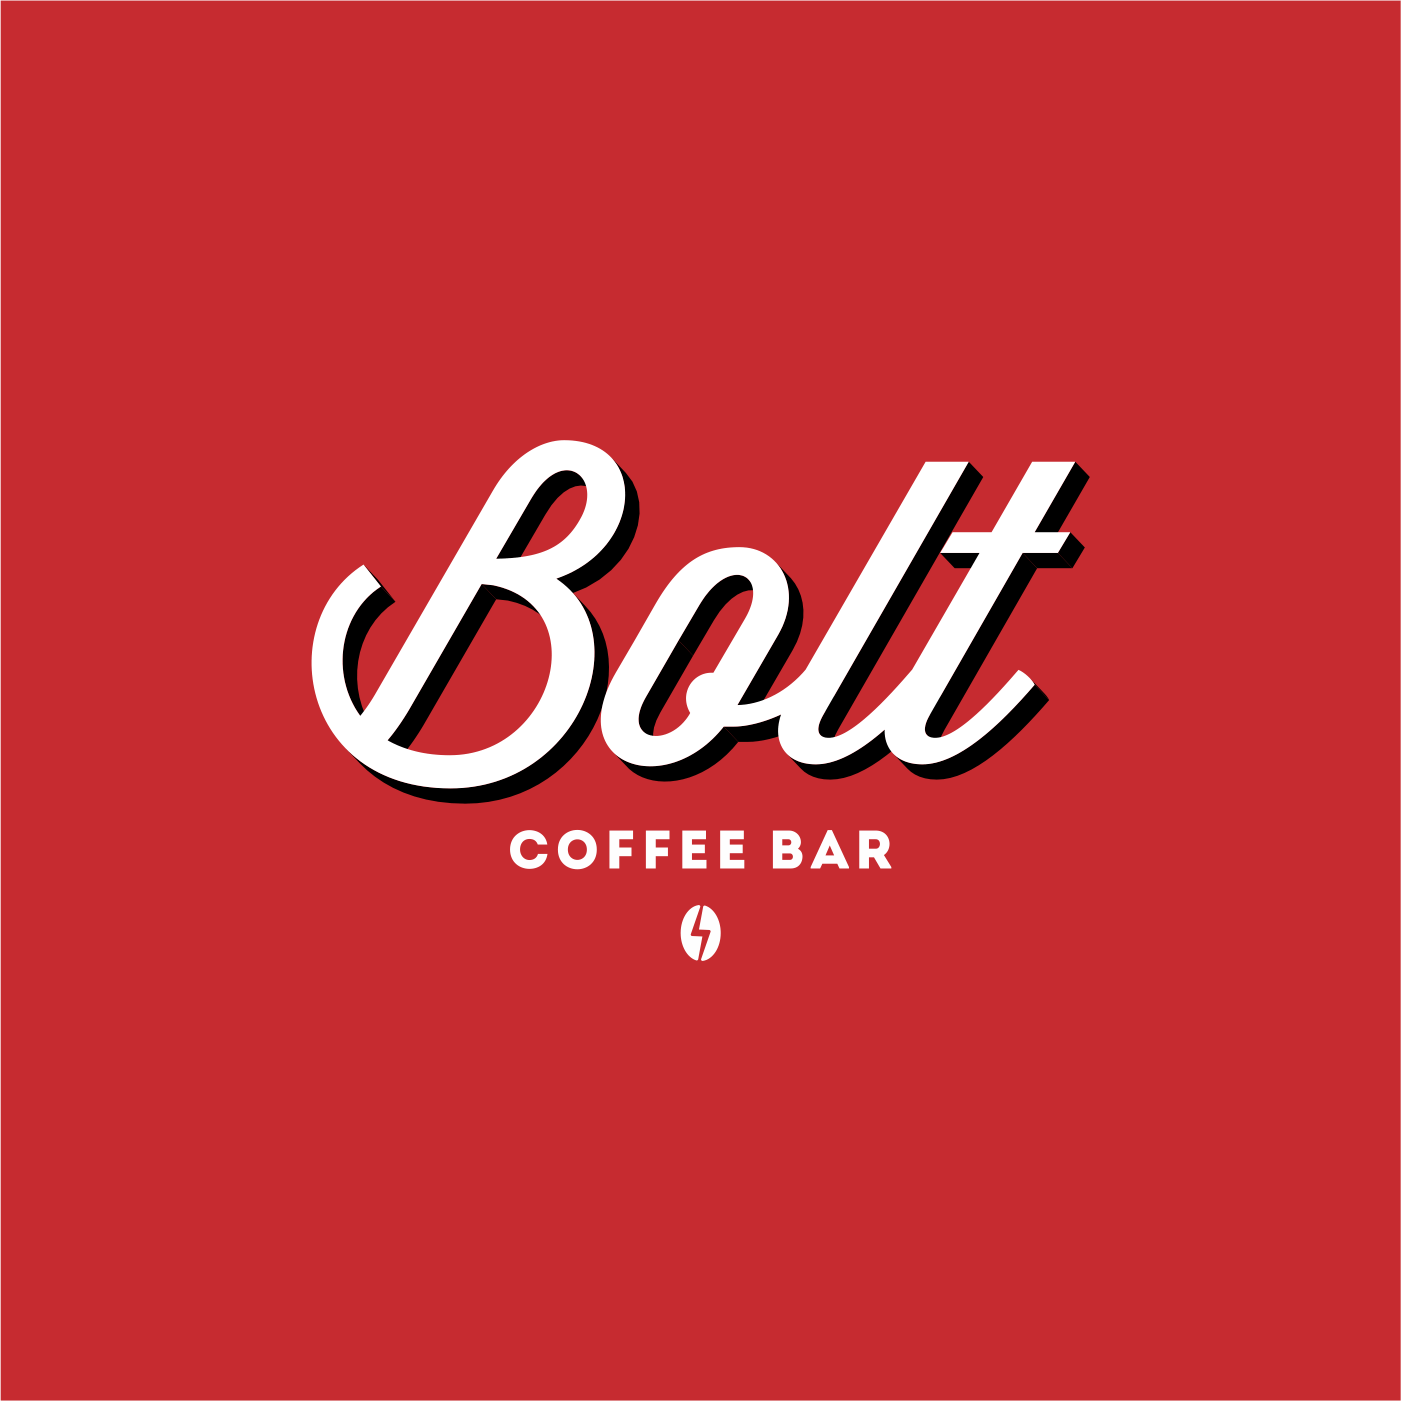 Gree Logo - Upmarket, Bold, Coffee Shop Logo Design for Bolt Coffee Bar by Gree ...